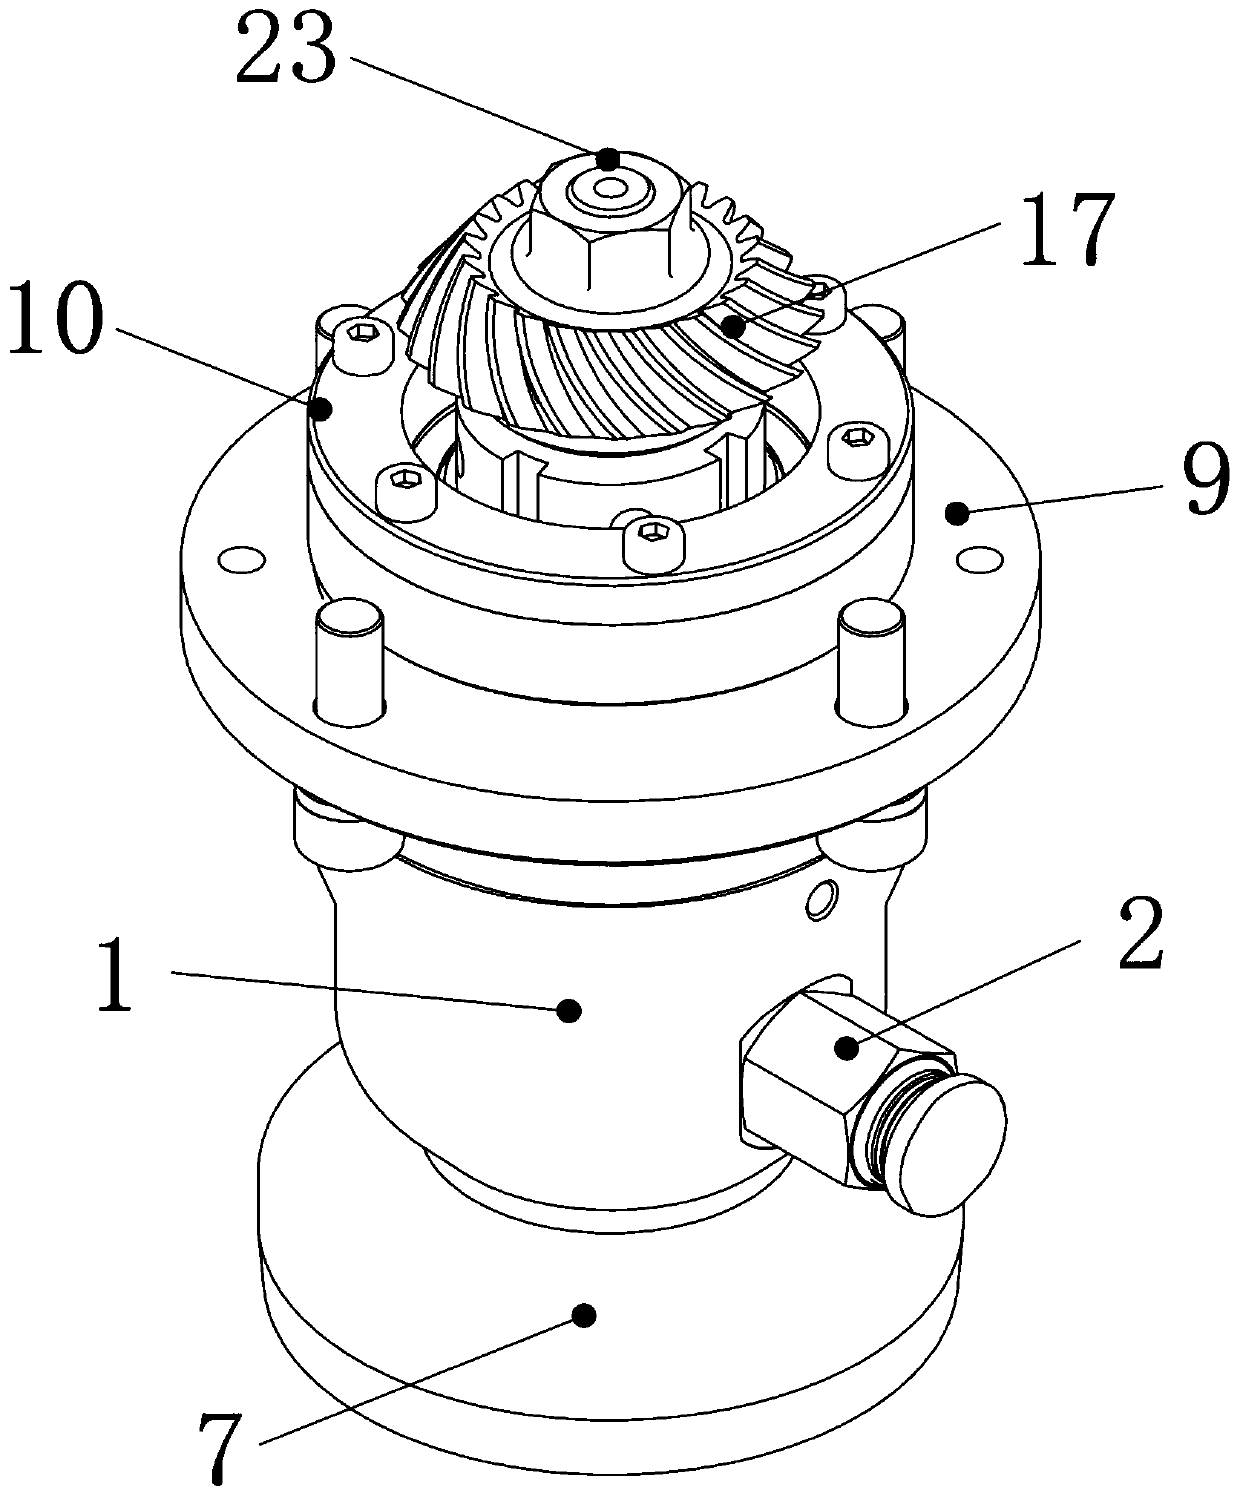 Novel air floating polishing wheel mechanism and polishing machine device